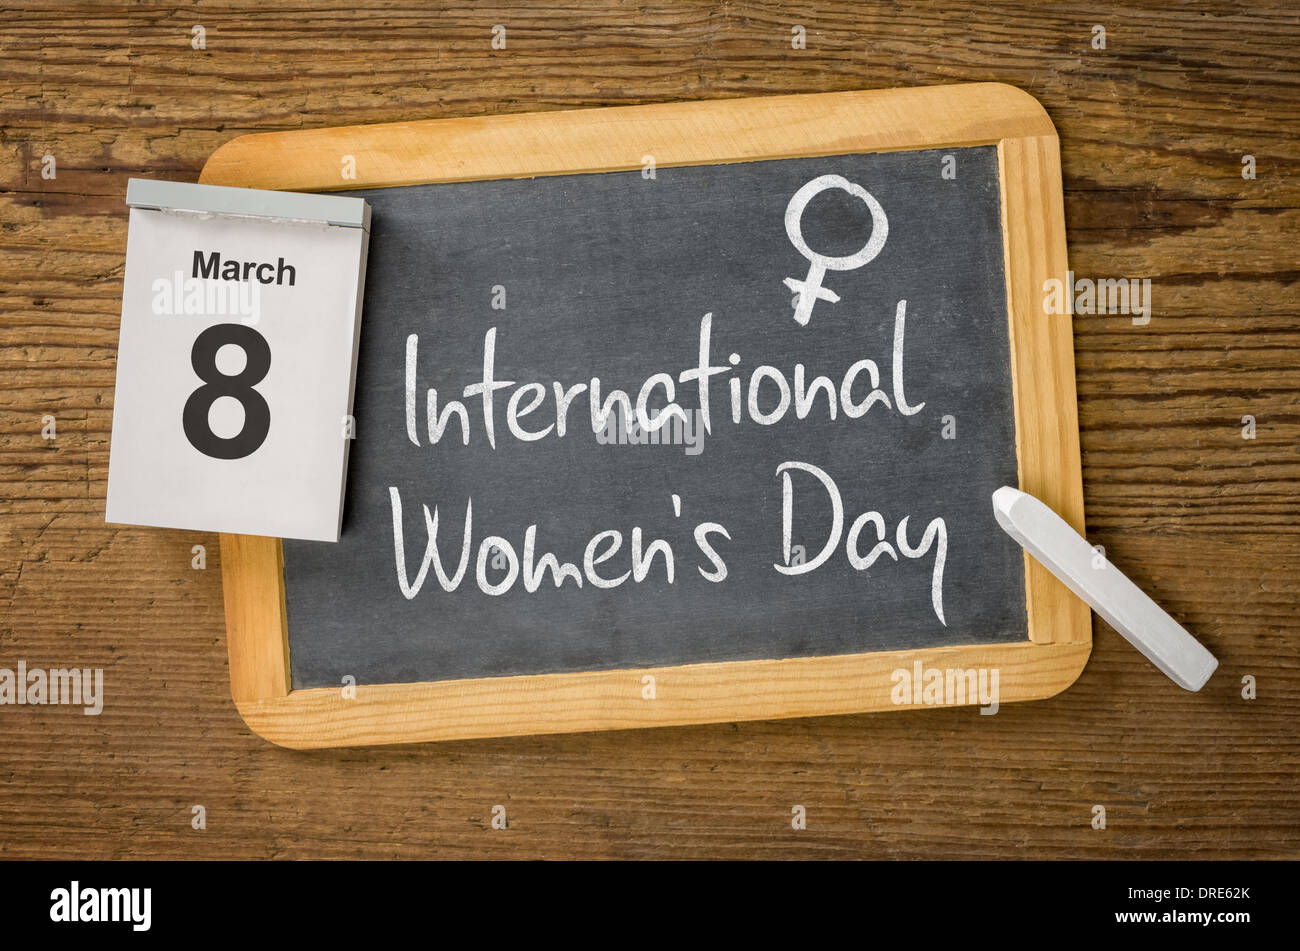 International Women's Day, March 8 Stock Photo